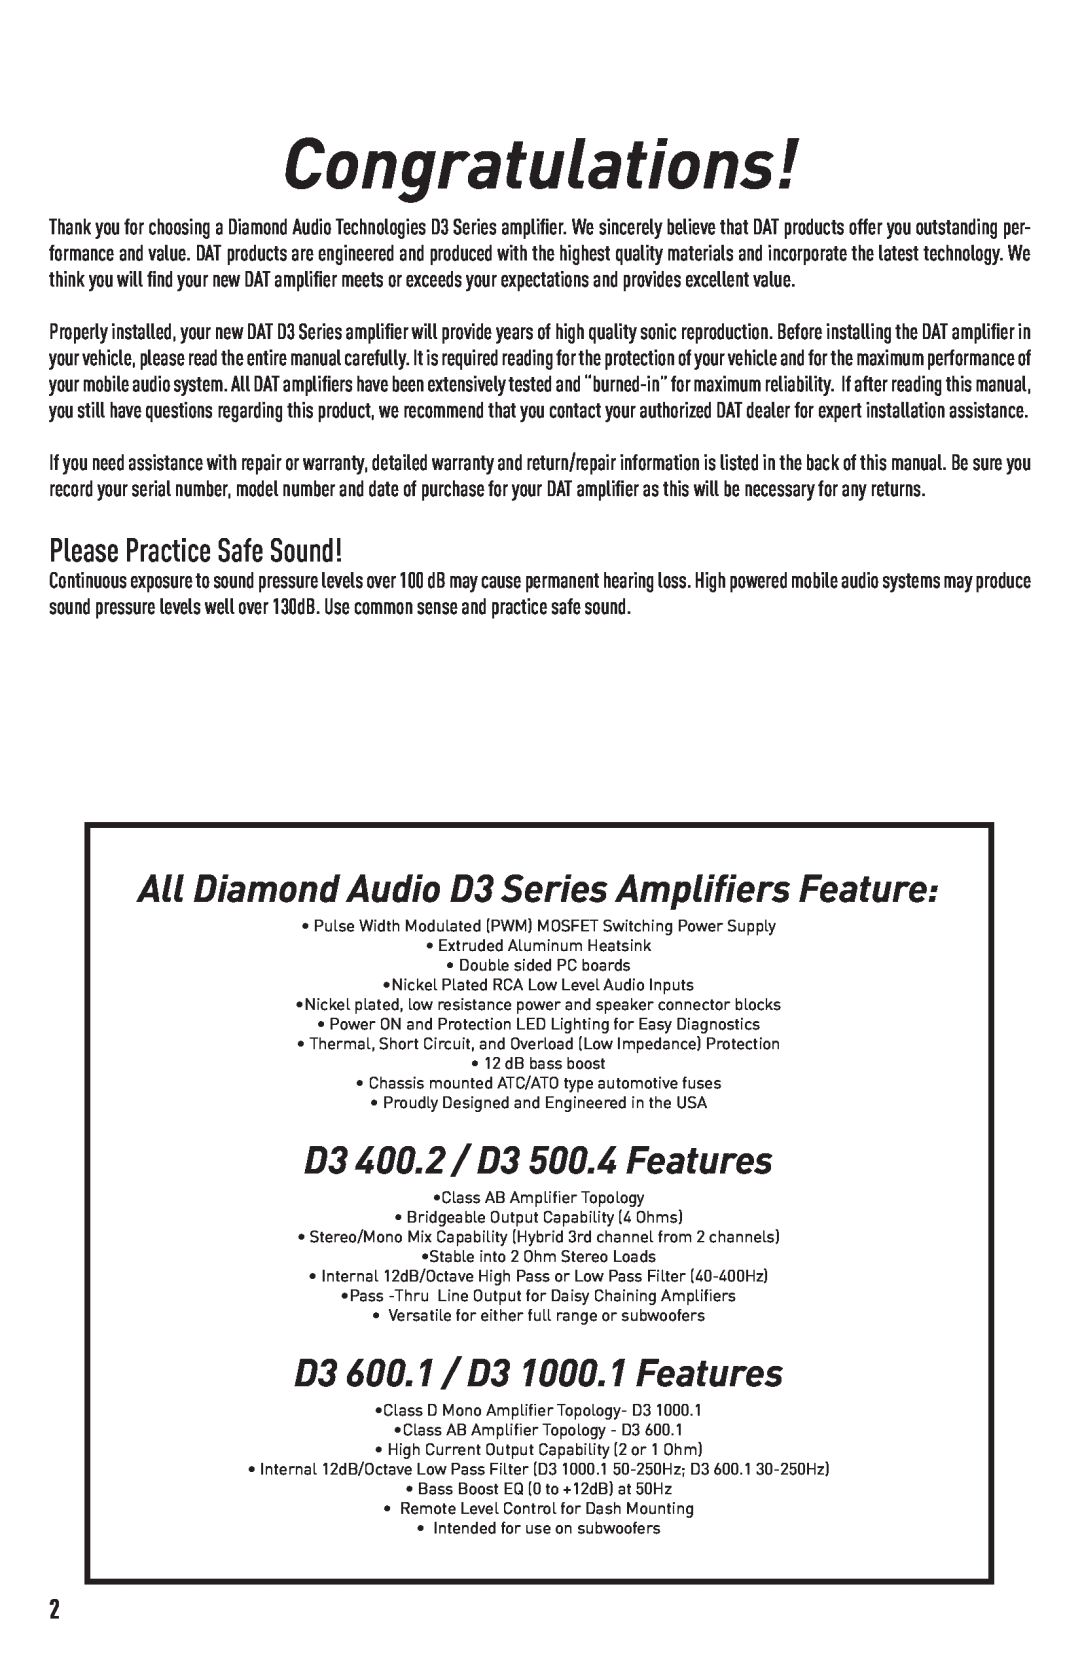 Diamond Audio Technology D3 1000.1, D3 500.4, D3 600.1 Congratulations, All Diamond Audio D3 Series Amplifiers Feature 